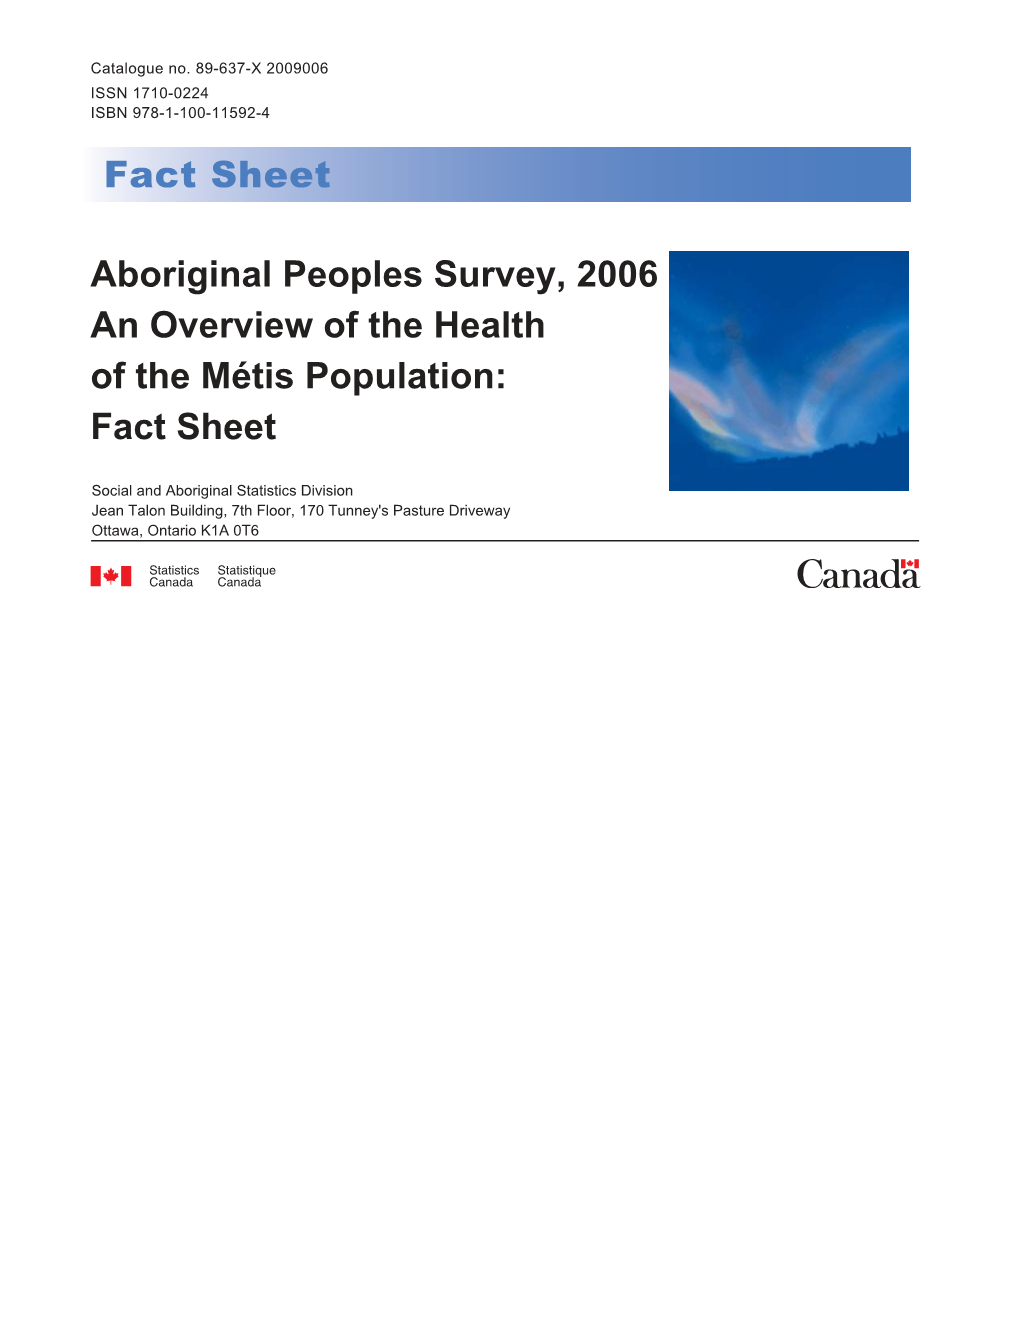 An Overview of the Health of the Métis Population: Fact Sheet